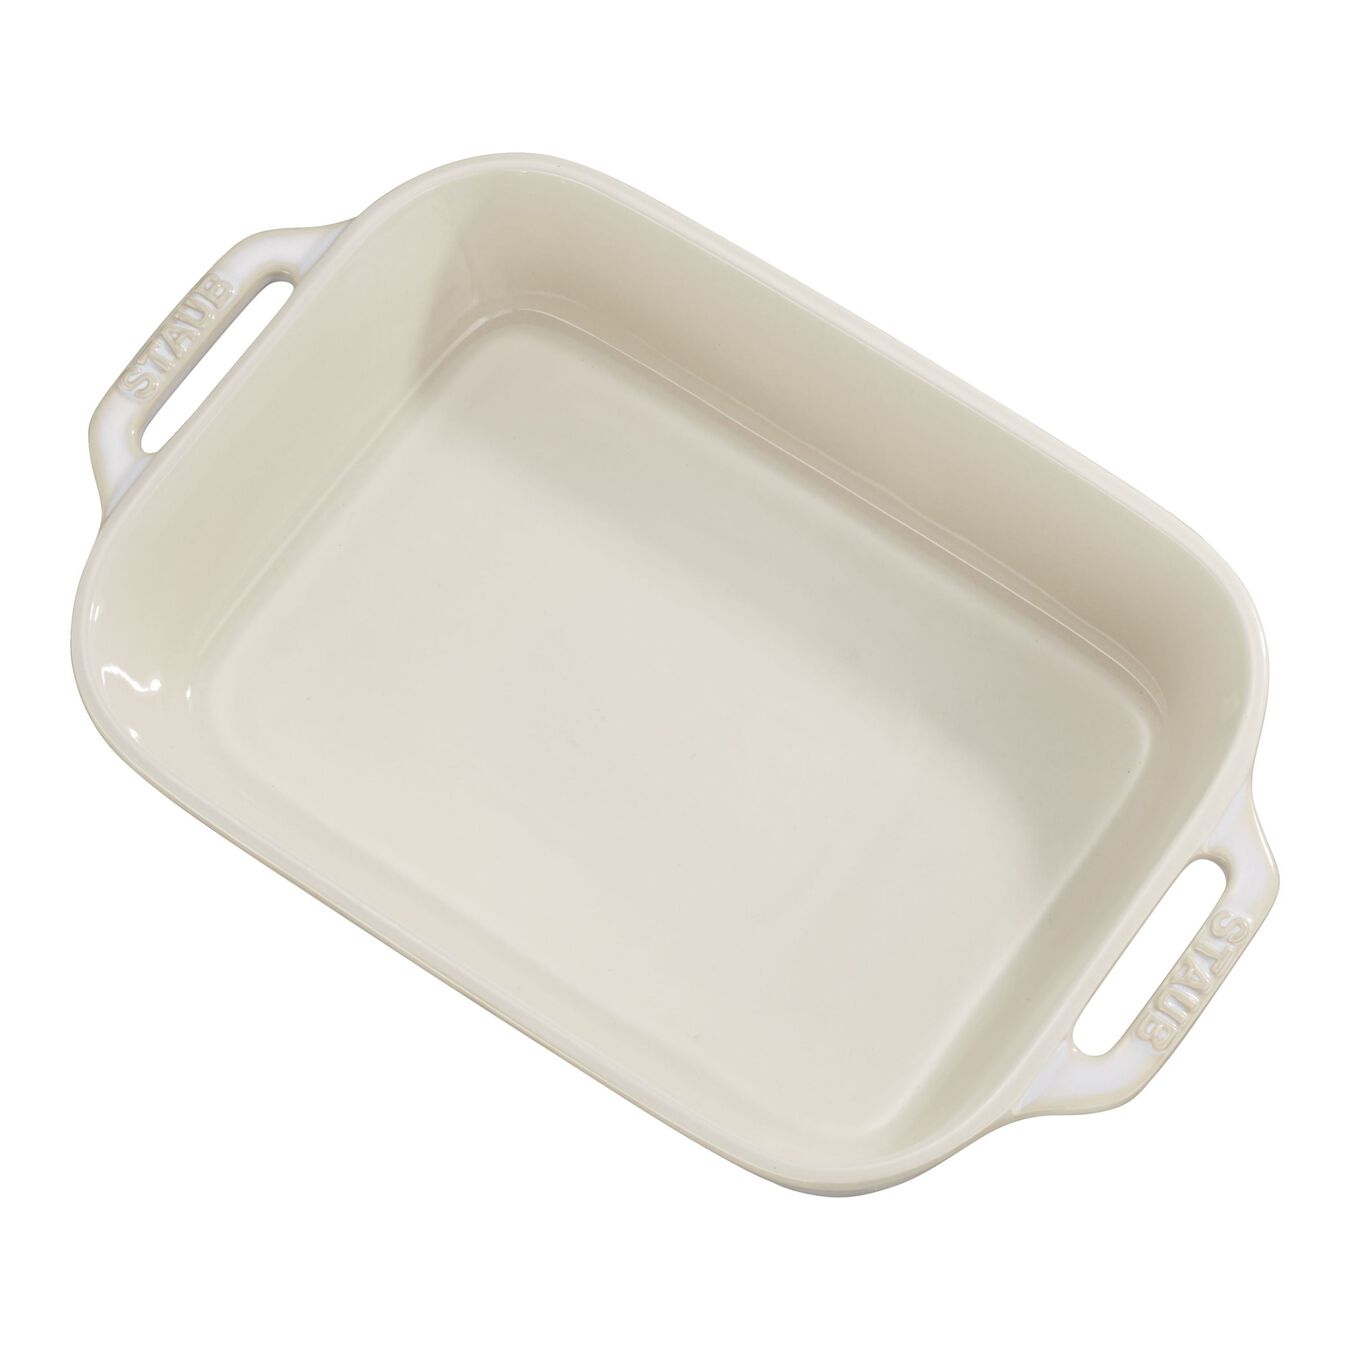 32 cm x 20 cm rectangular Ceramic Oven dish ivory-white,,large 1